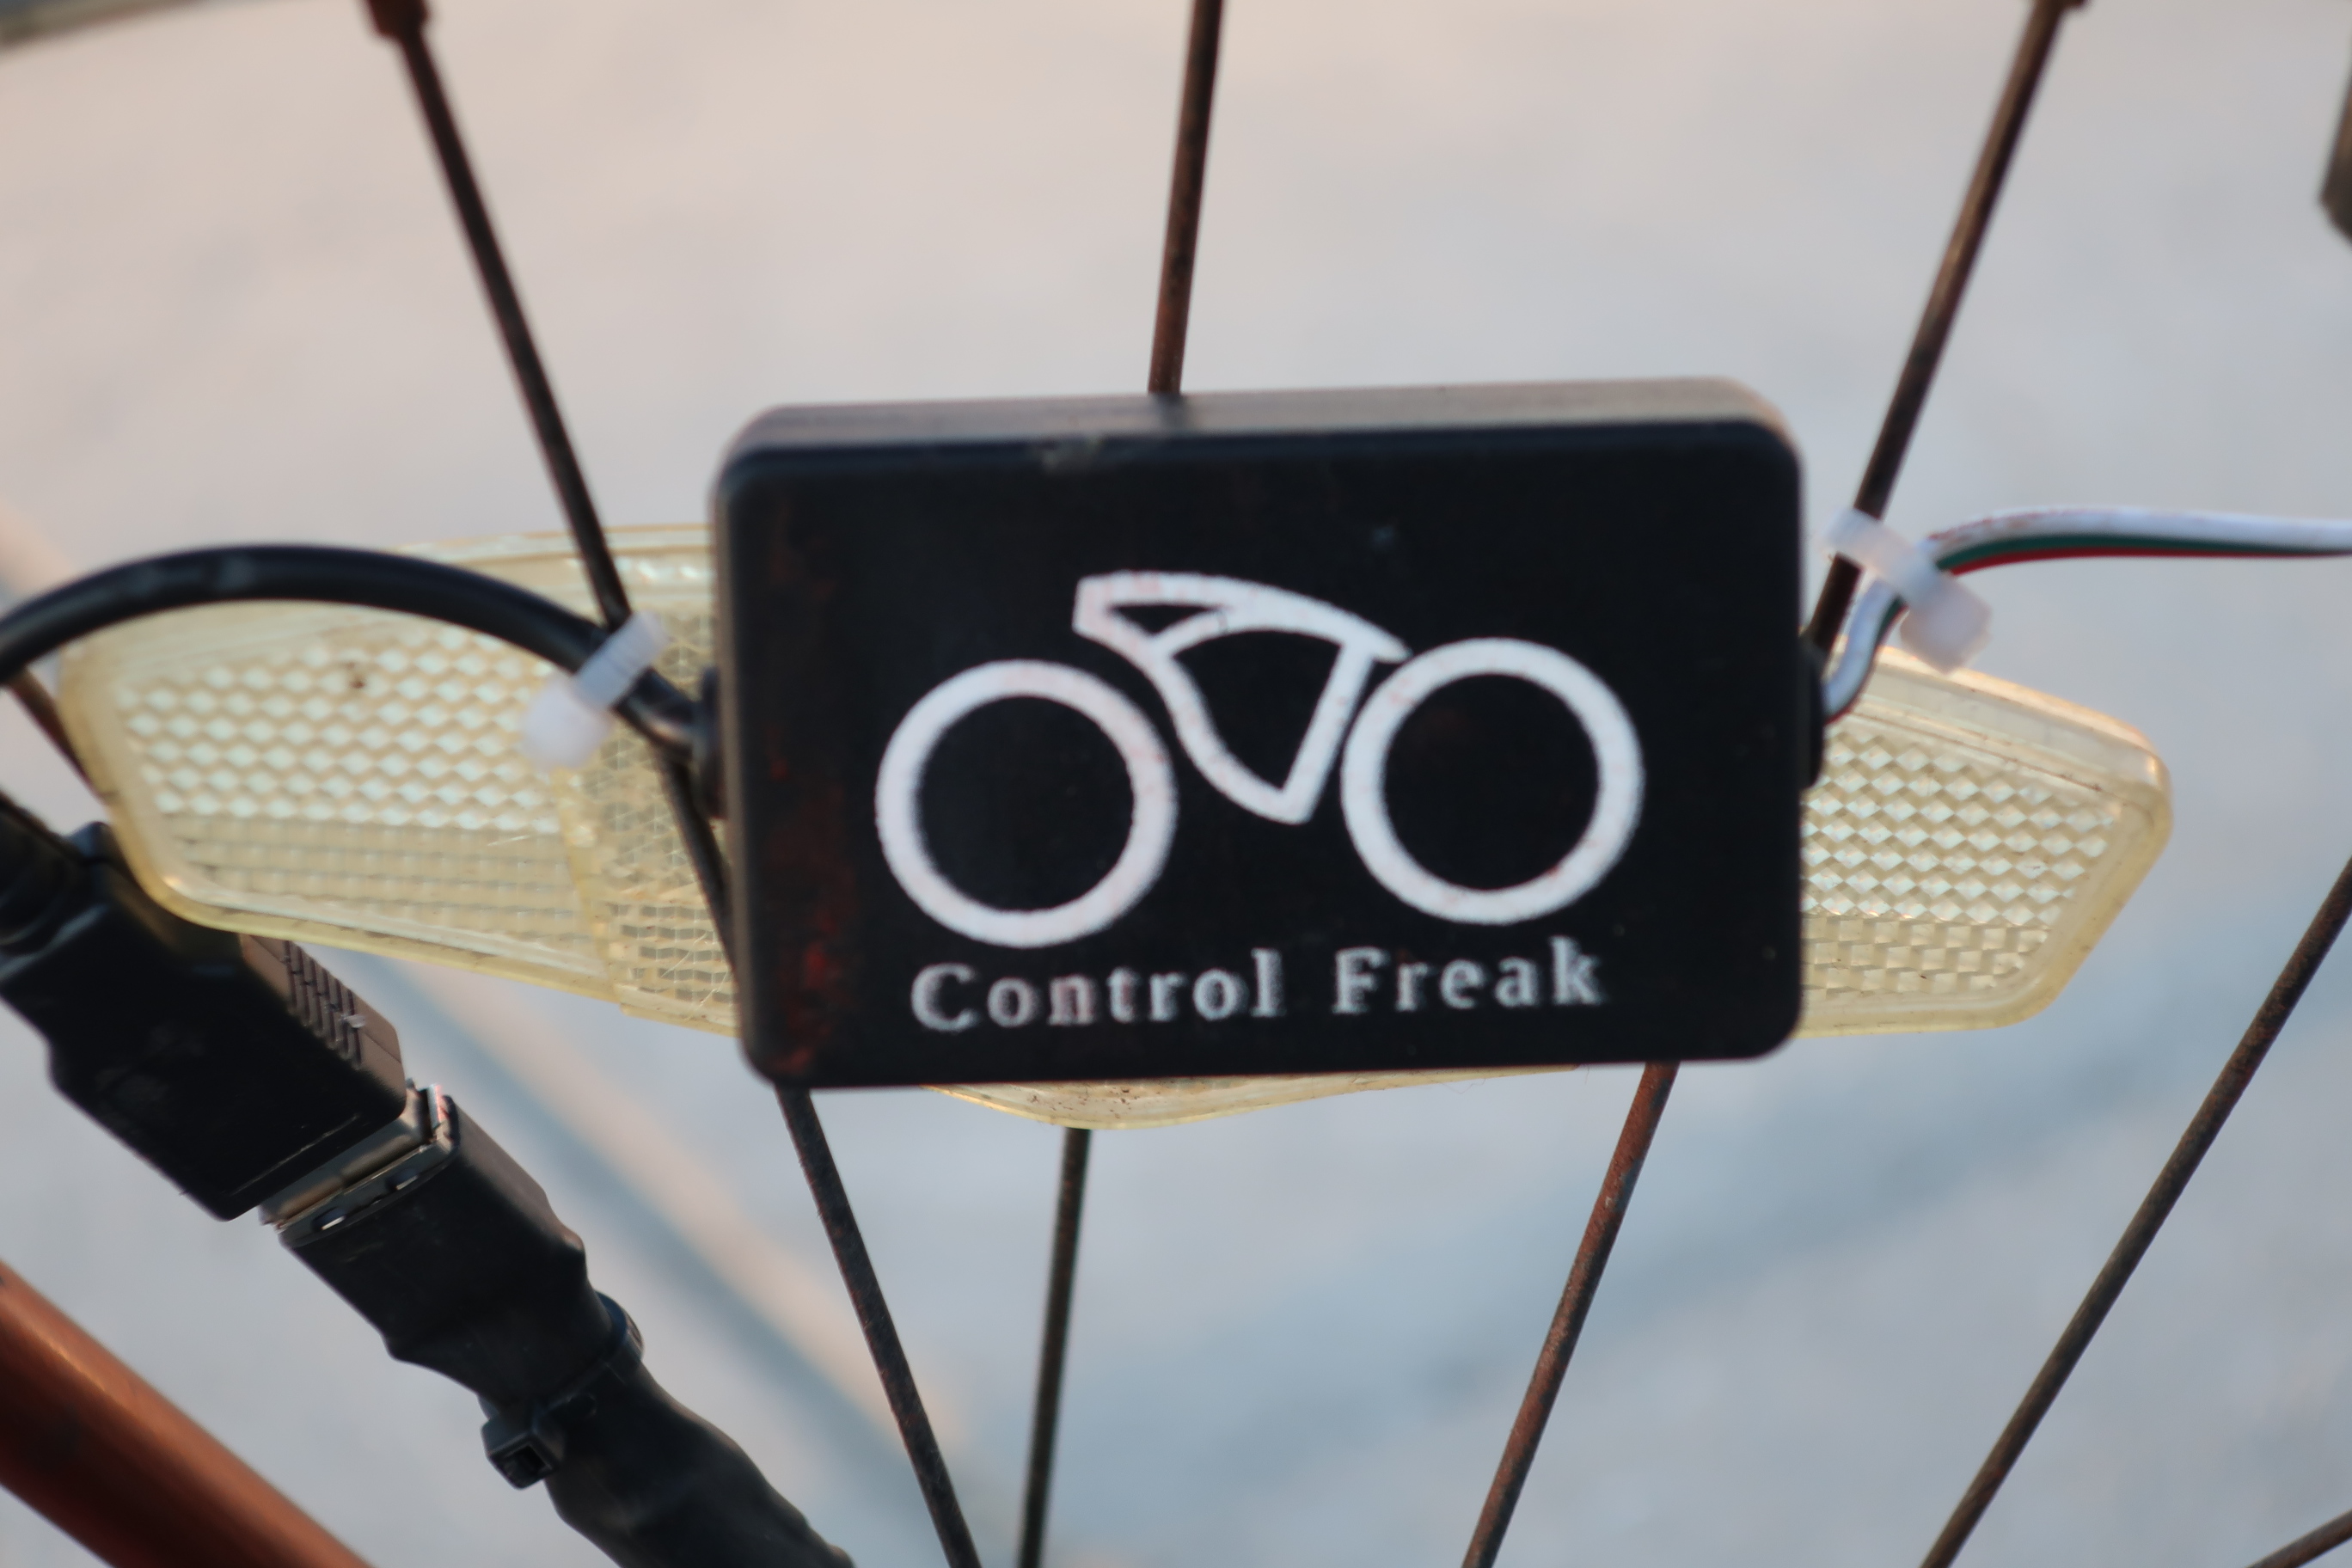 Control Freak on wheel